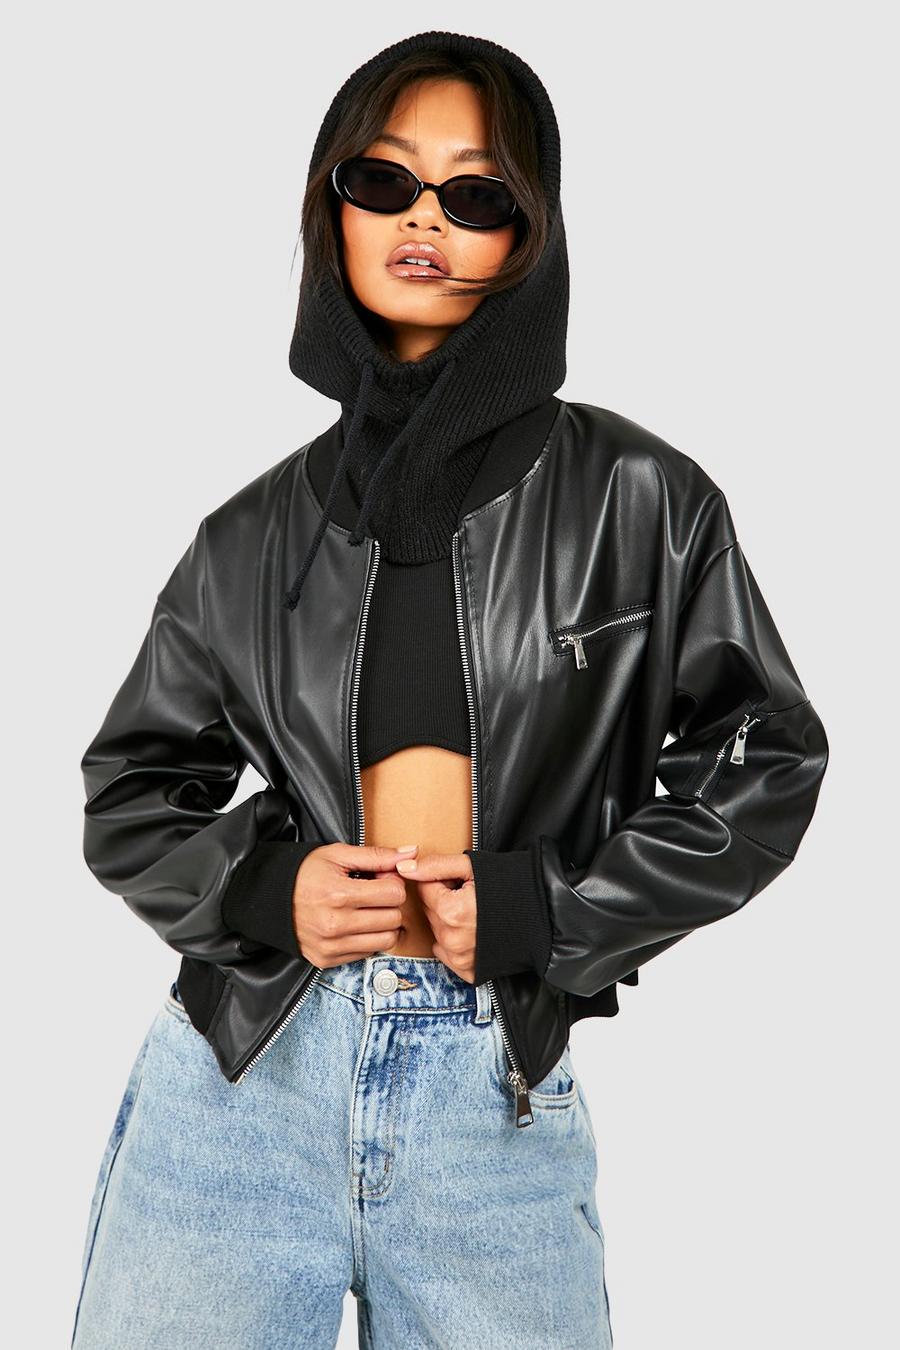 boohoo Faux Fur Trim Midi Leather Jacket - Black - Size 12